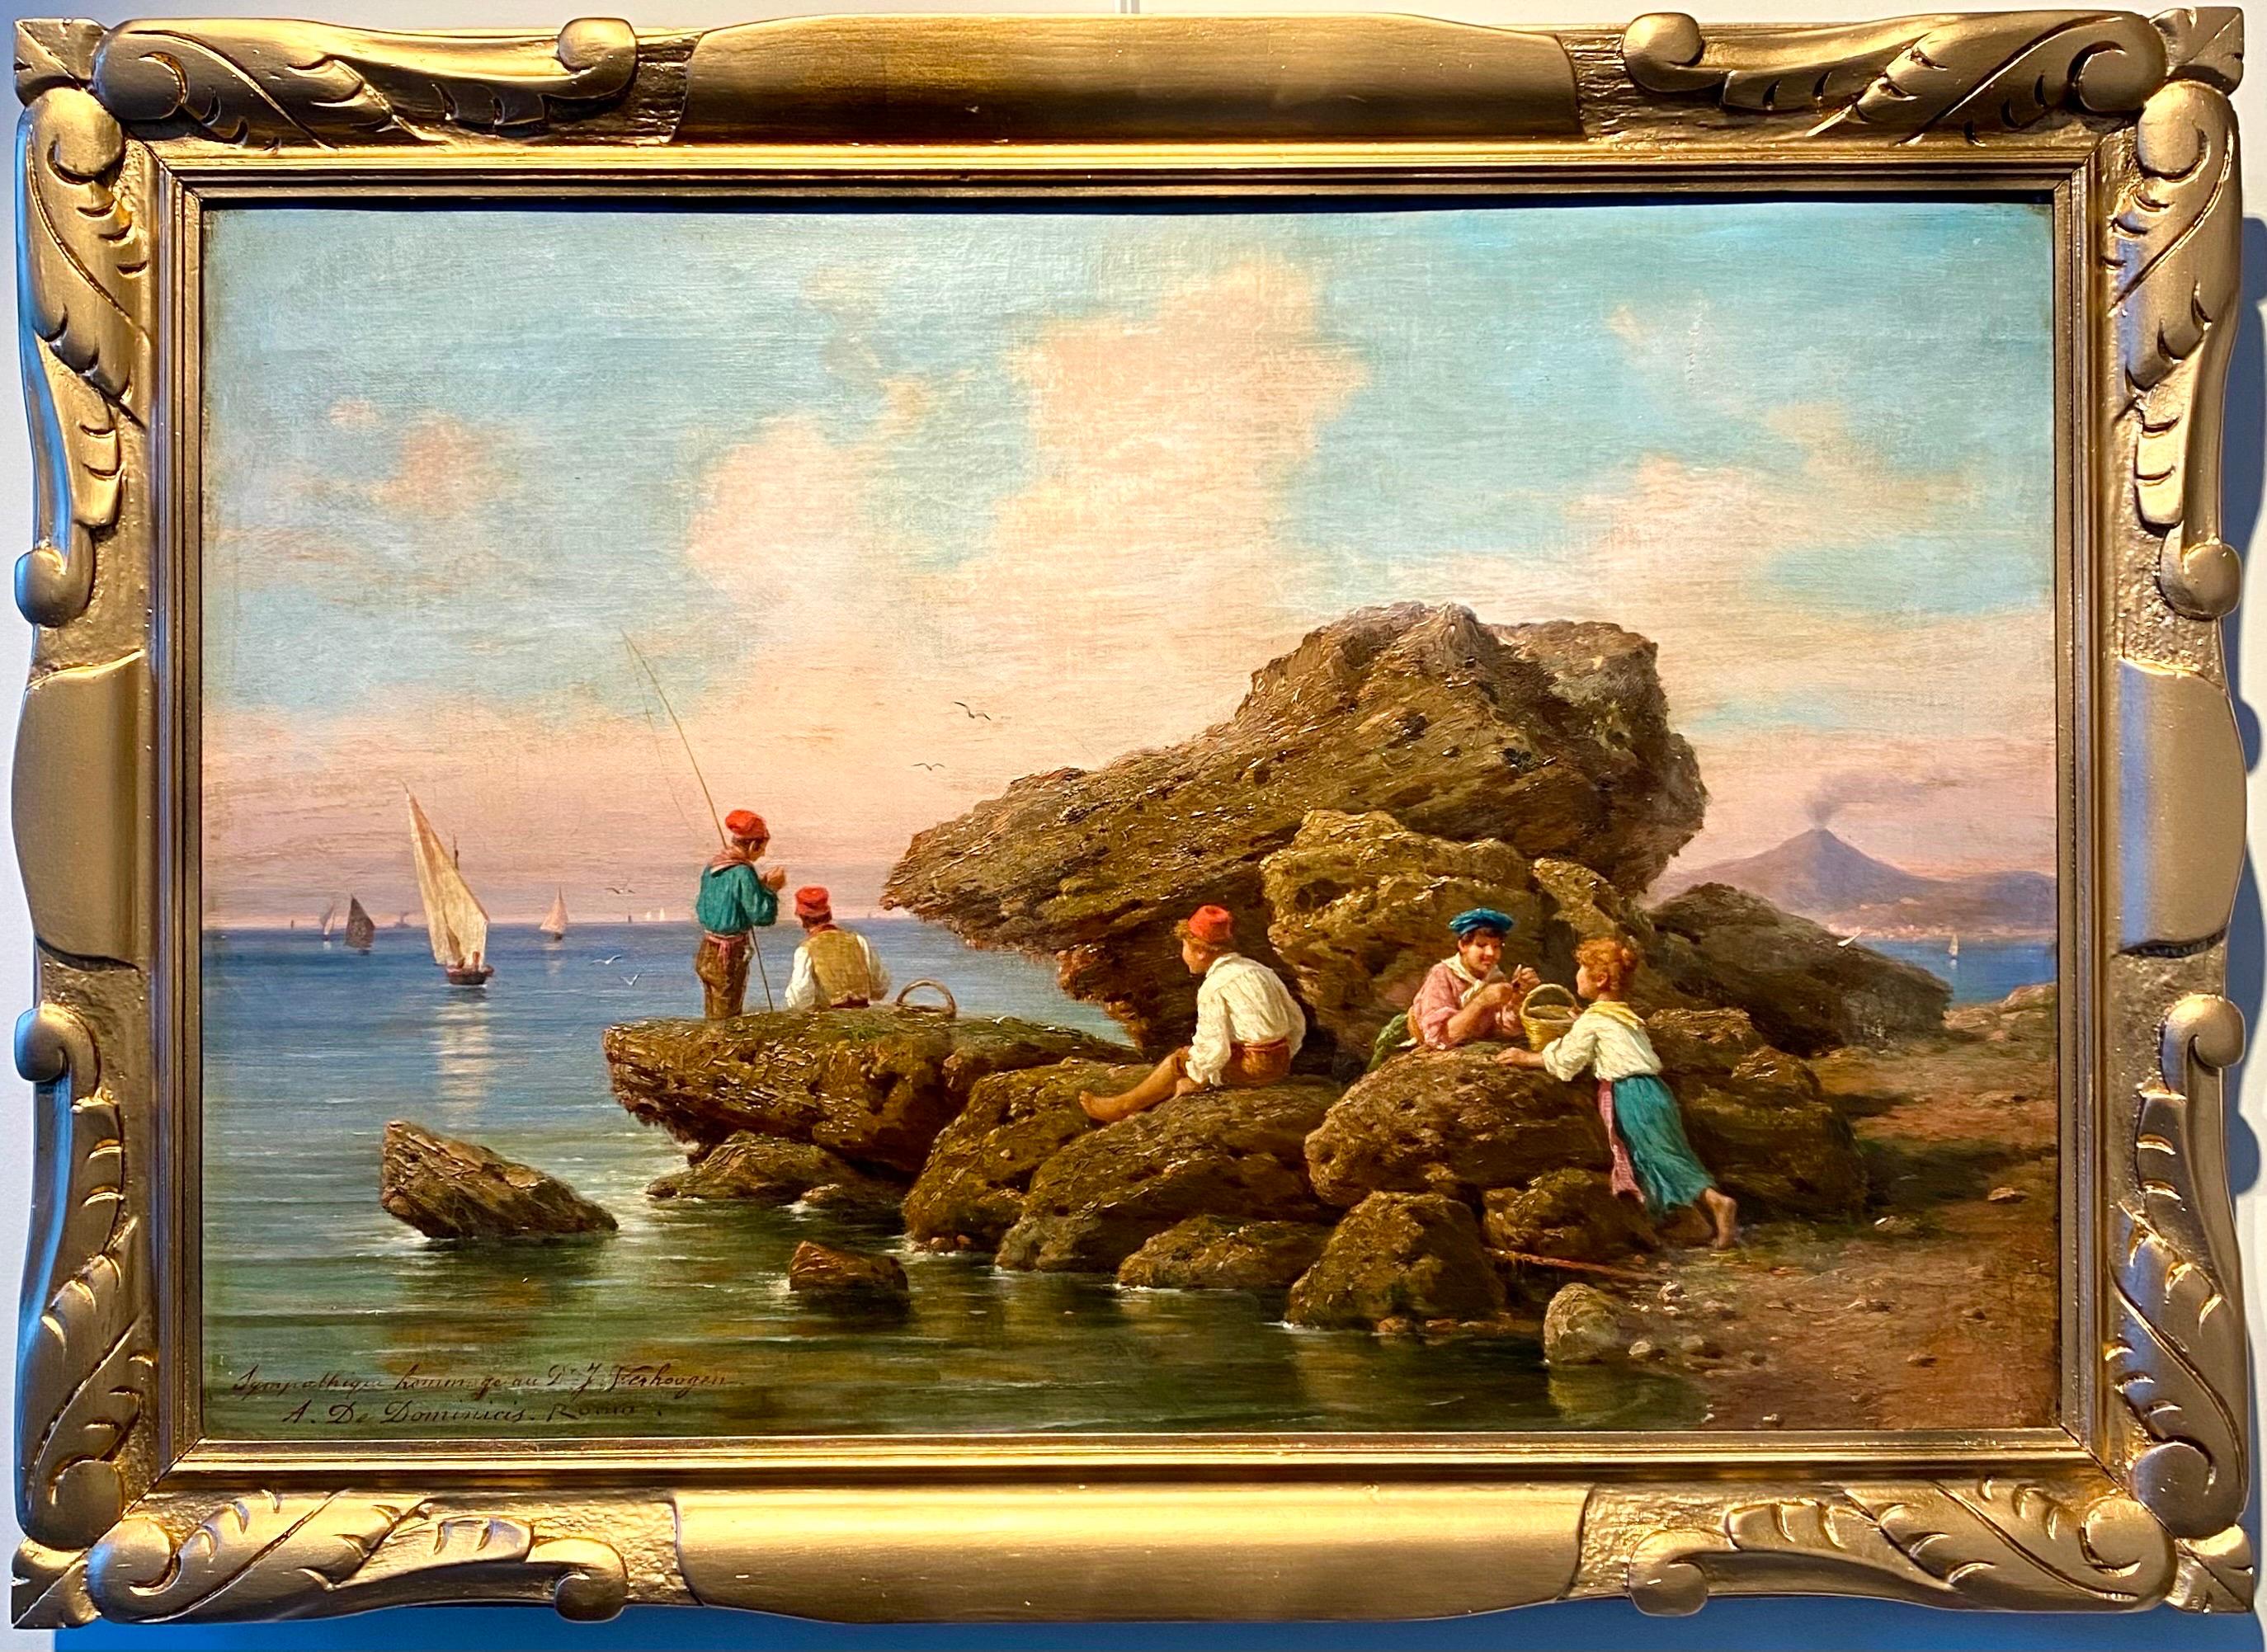 Achille De Dominicis Figurative Painting - 19th century Italian painting, Sweet childhood moments - Children sea